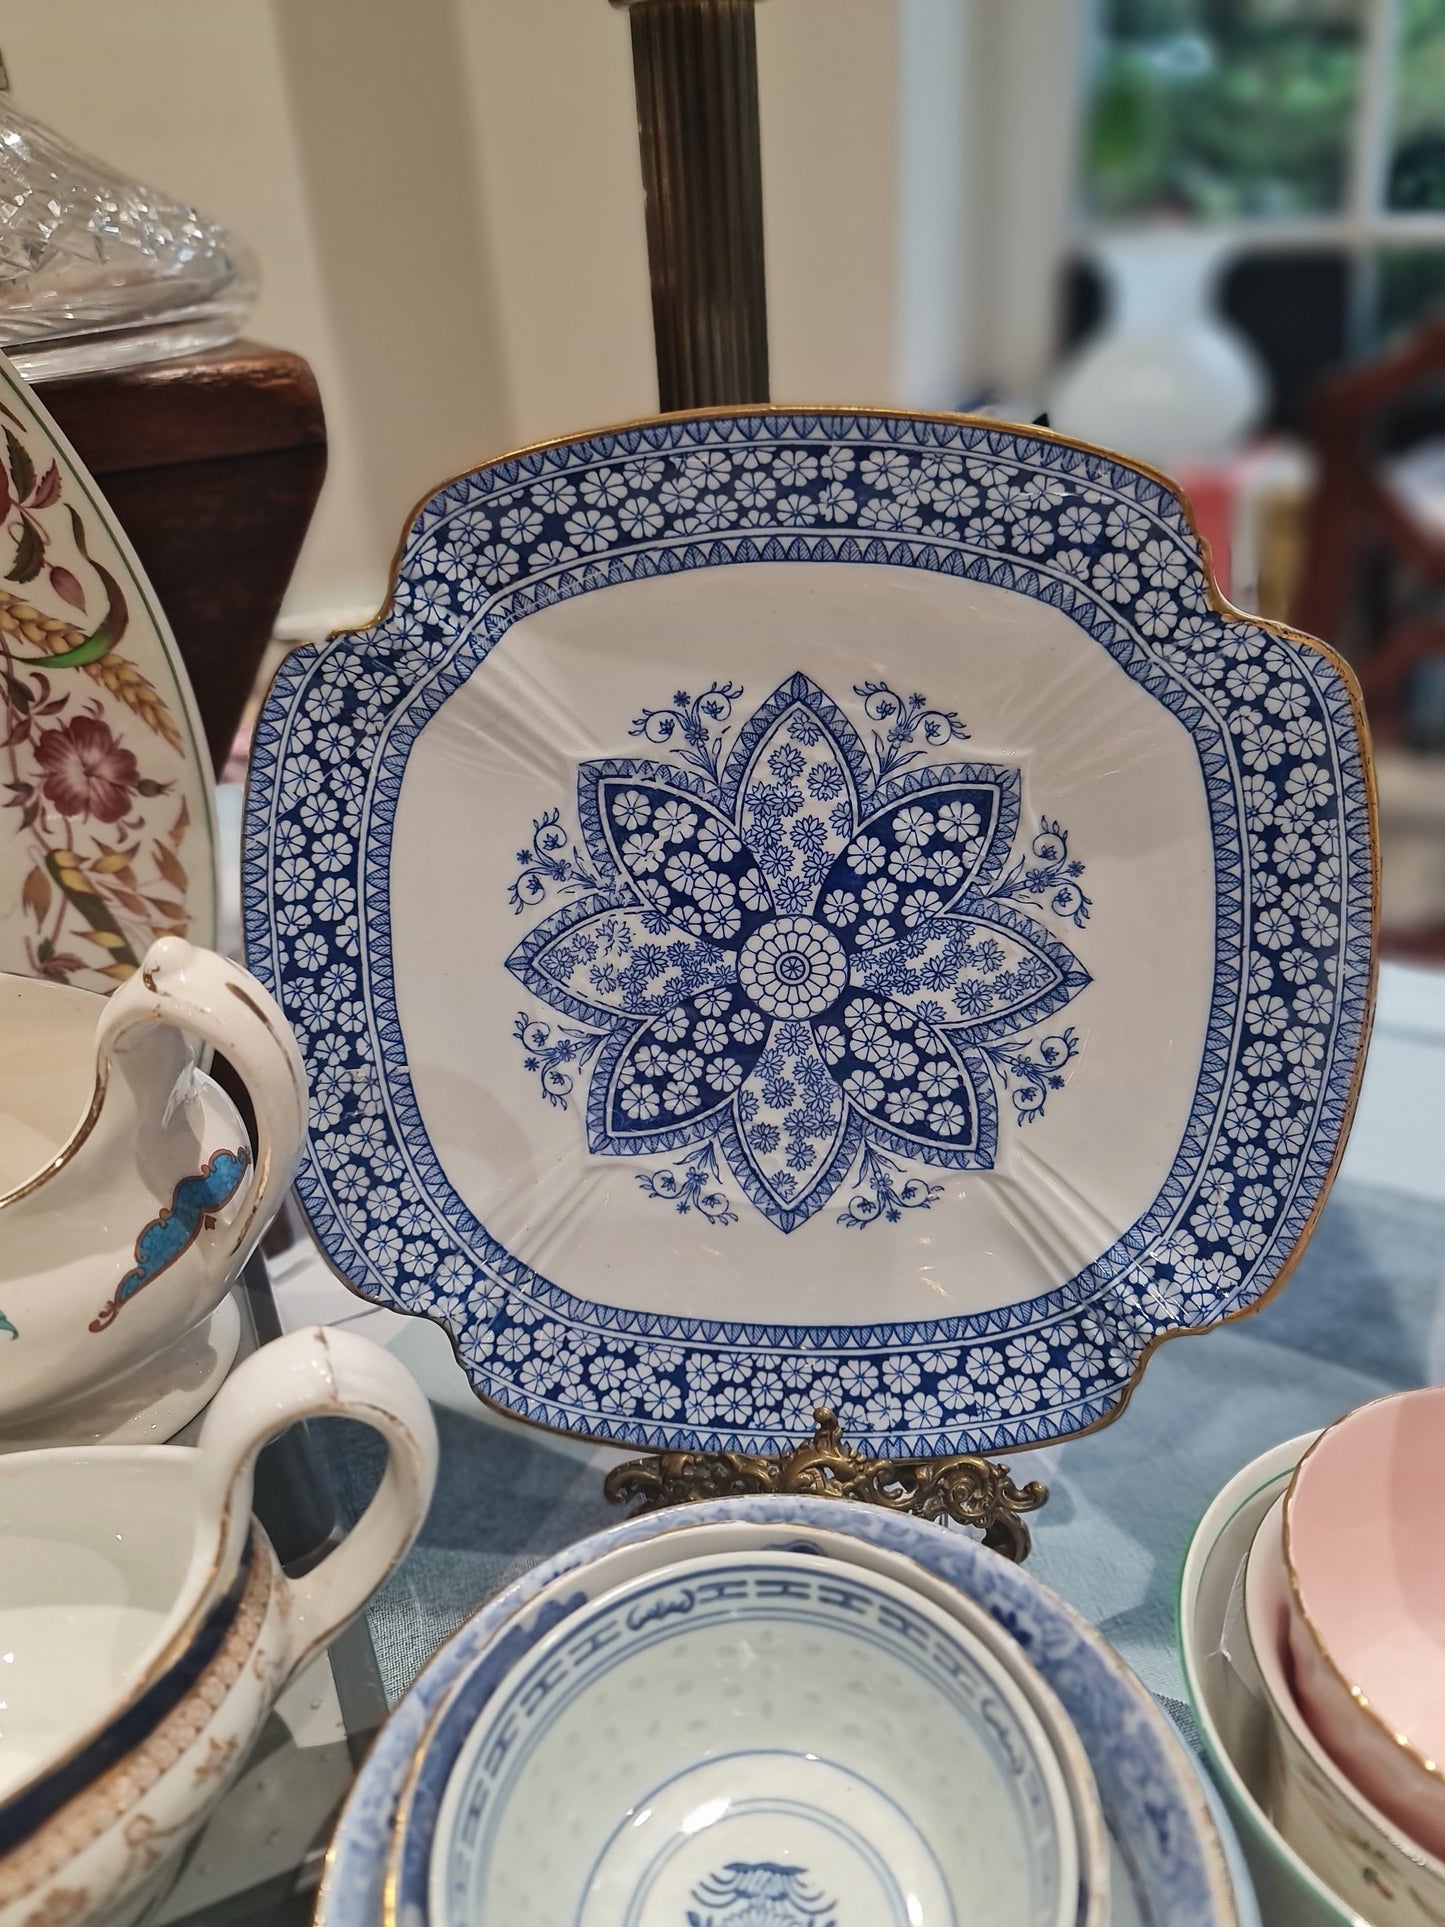 Rare Spode Antique Blue and white Plate26 cm plate s1820-1860